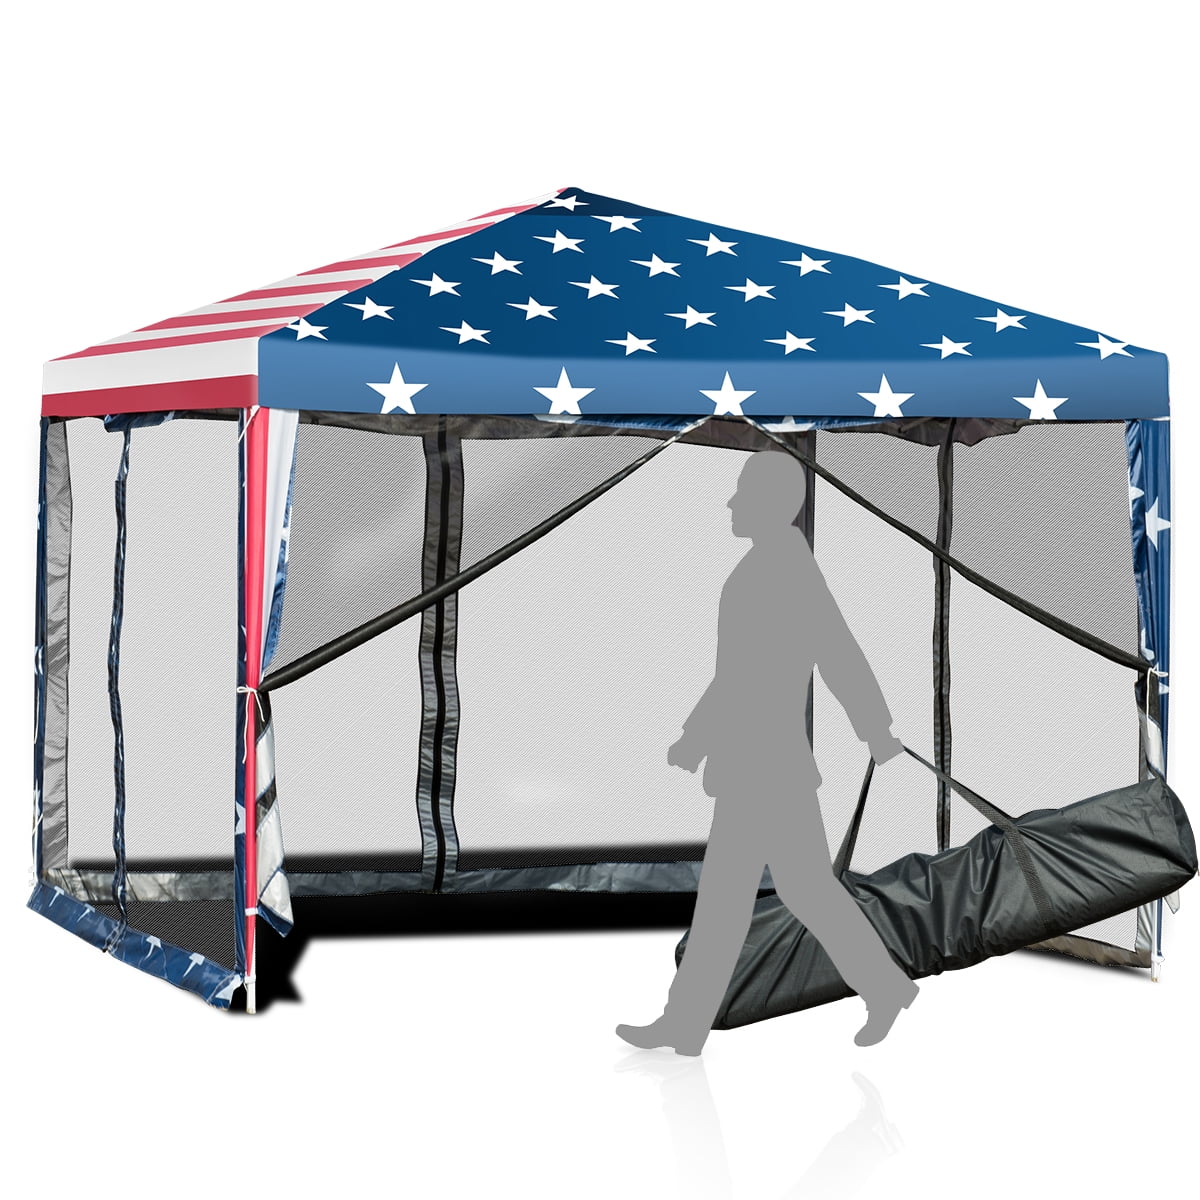 Steel Frame Gazebo Tent w/ 100 Square Feet of Shade for Patio Outdoor Gazebo Canopy Shelter w/ Netting Backyard Poolside Tangkula 10x10 Feet Patio Gazebo 